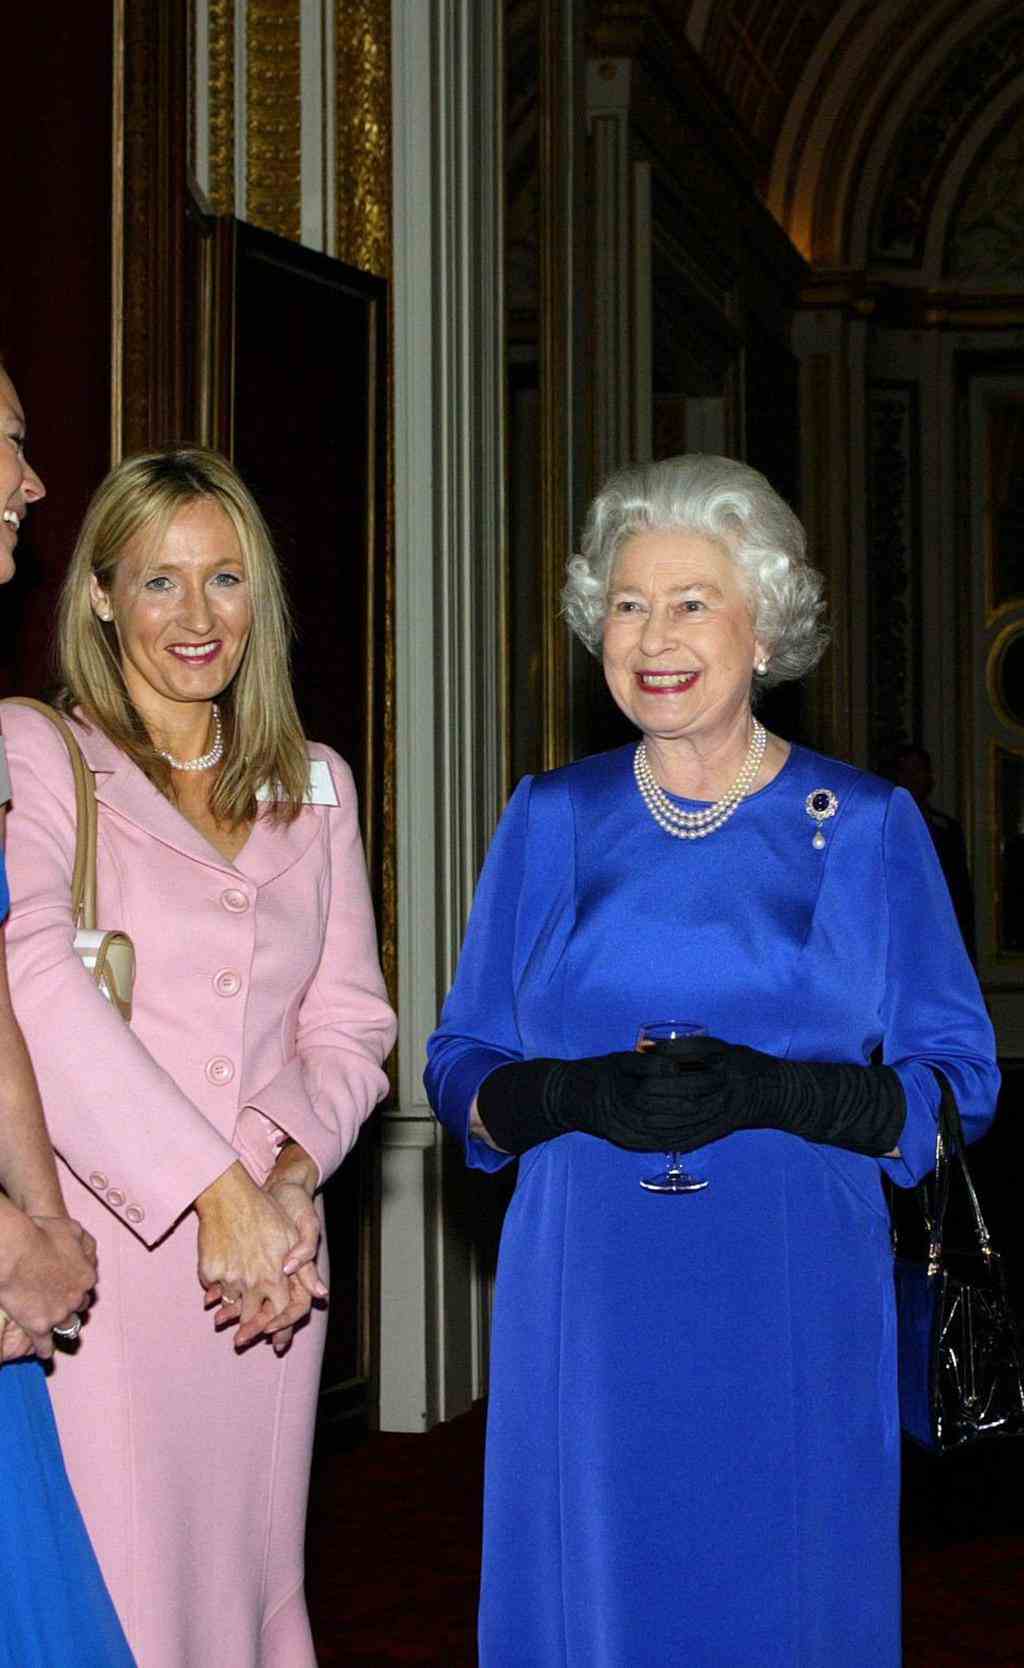 Women Achievers meet the Queen